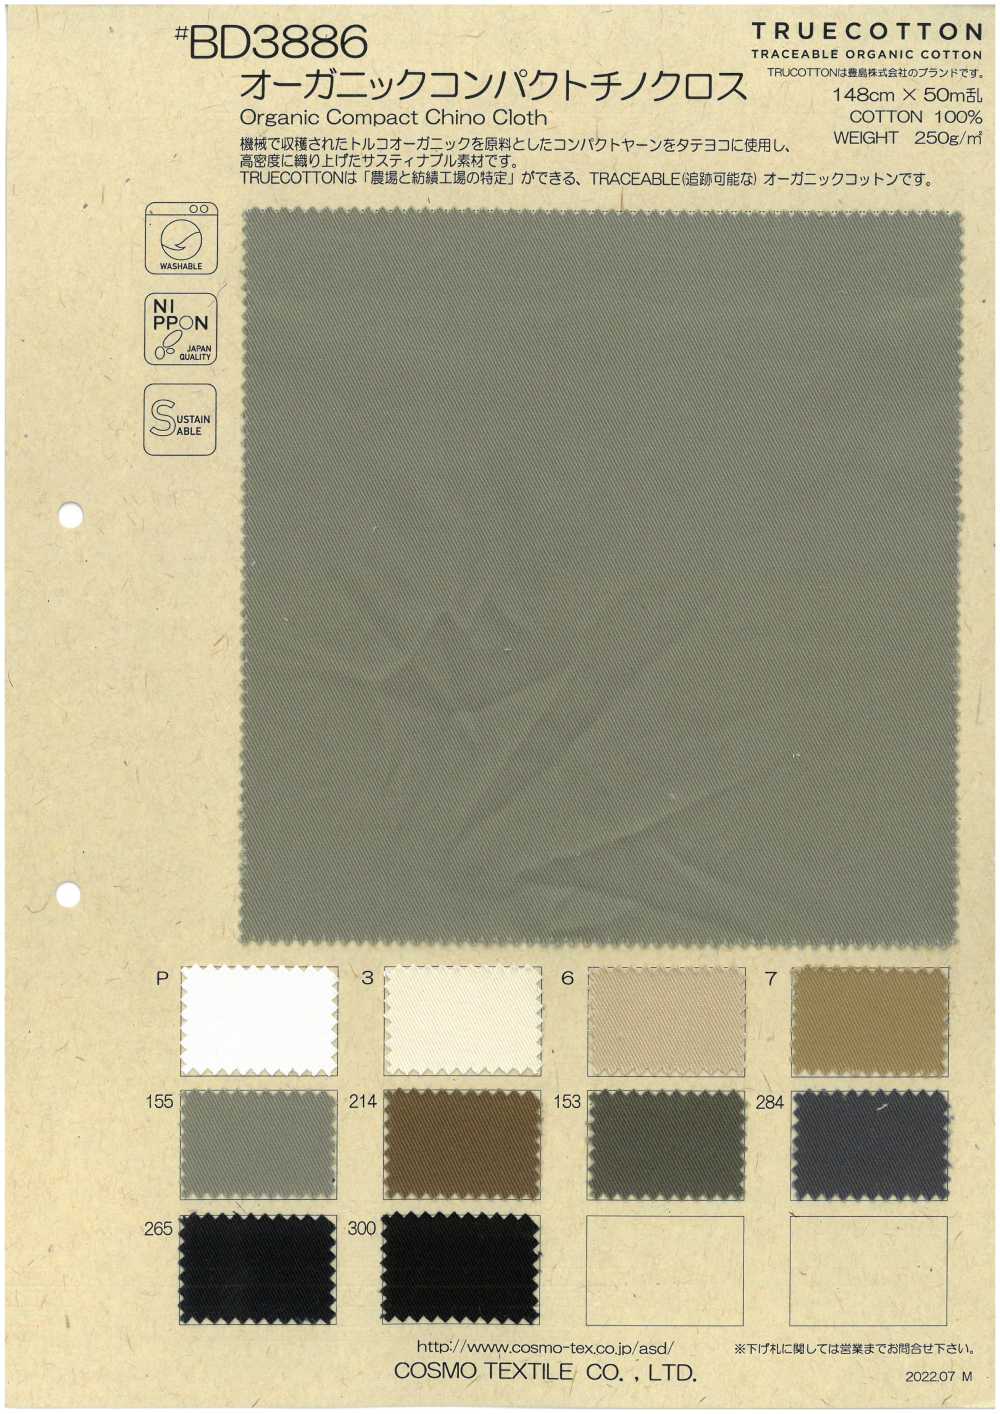 BD3886 Pano Chino De Fio Compacto Orgânico[Têxtil / Tecido] COSMO TEXTILE